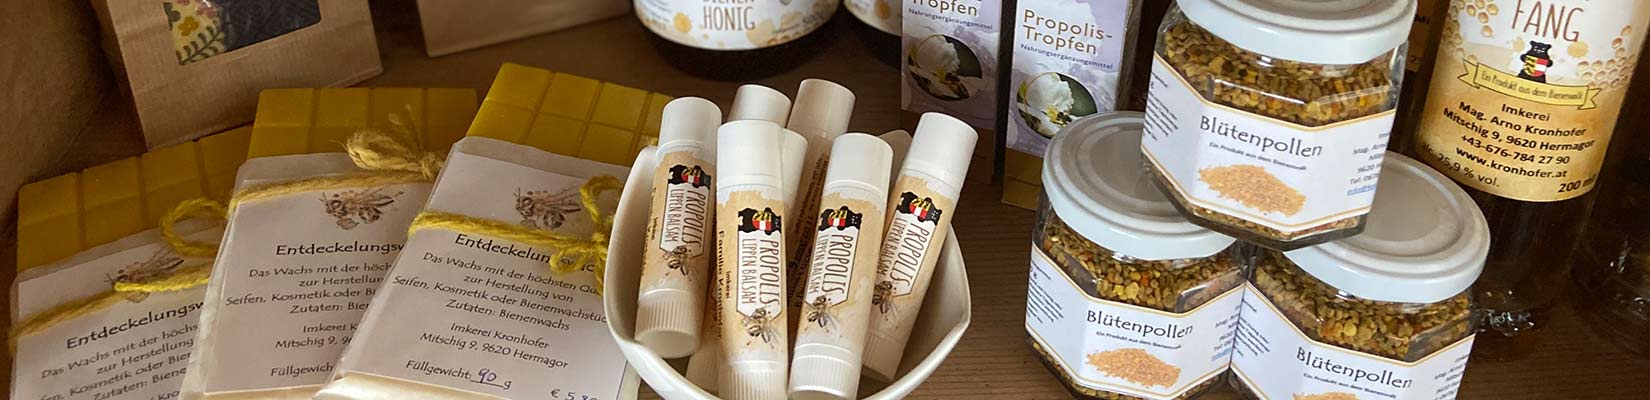 honigfest beauty produkte